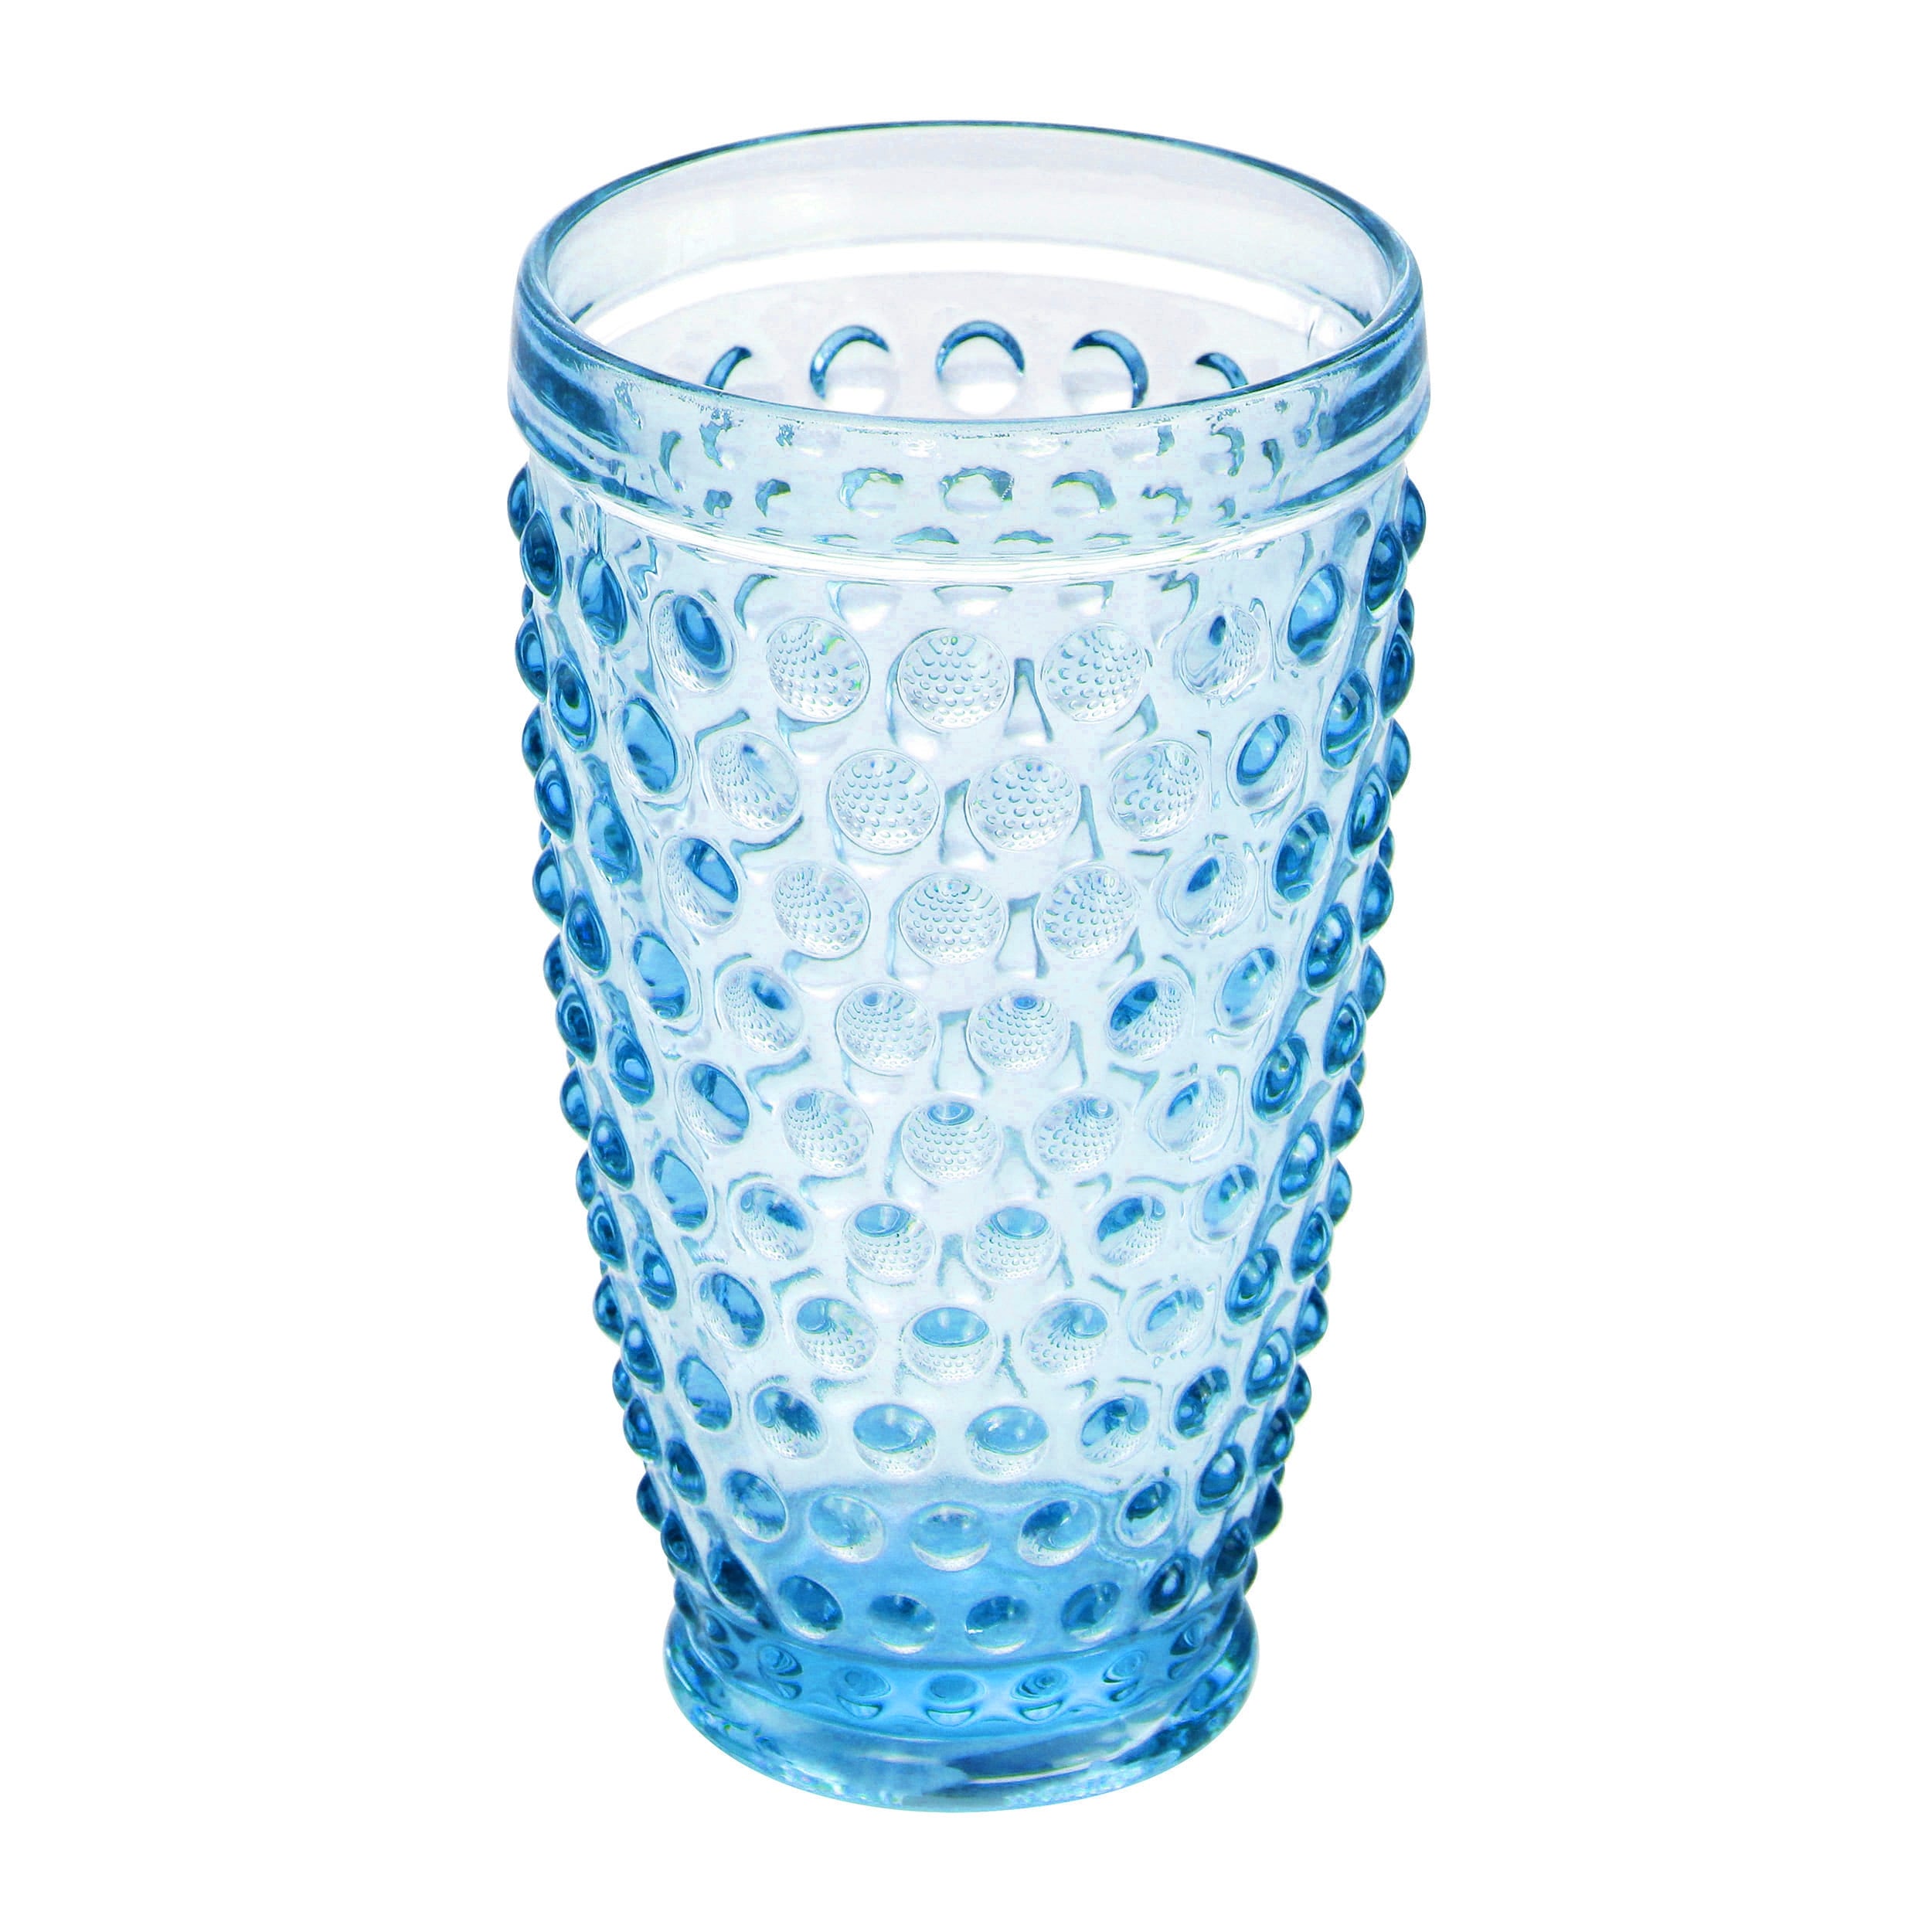 https://ak1.ostkcdn.com/images/products/is/images/direct/01824e2c82c915bbee2752ae0cb4eca6660d521d/Martha-Stewart-6-Piece-Hobnail-Handmade-Glass-Tumbler-Set-in-Blue.jpg